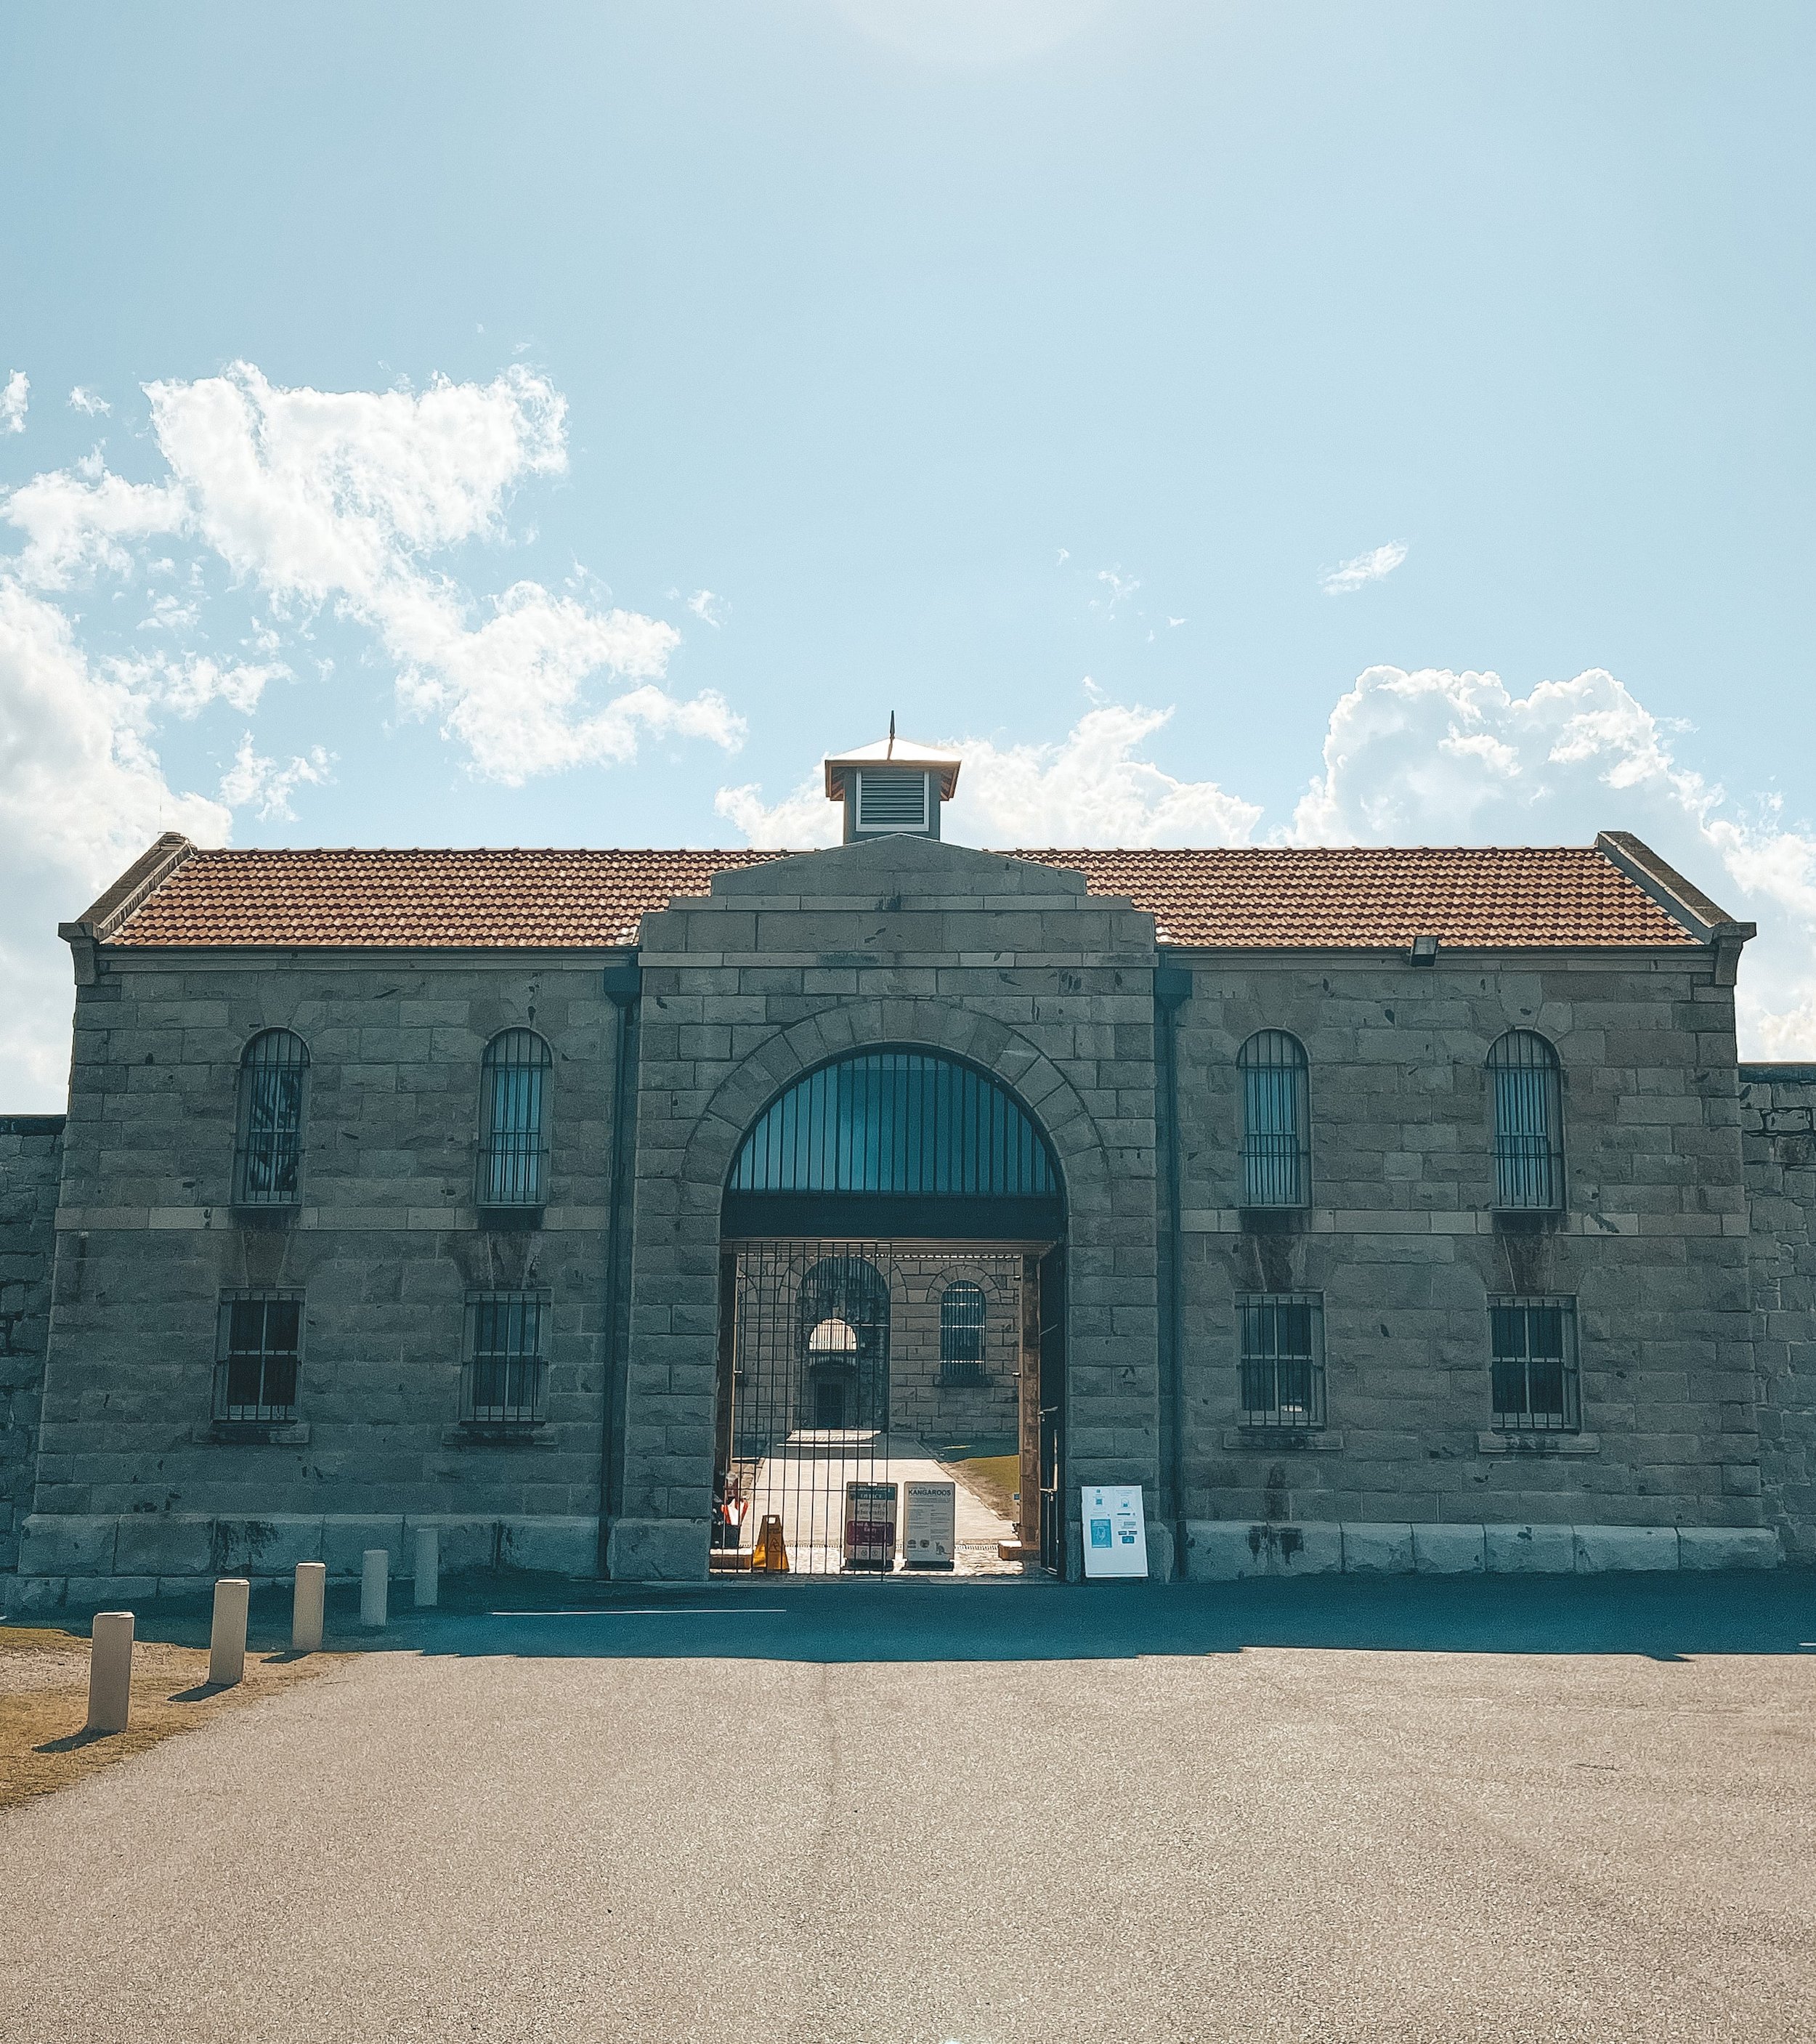 Trial Bay Gaol Prison - New South Wales (NSW) - Australia